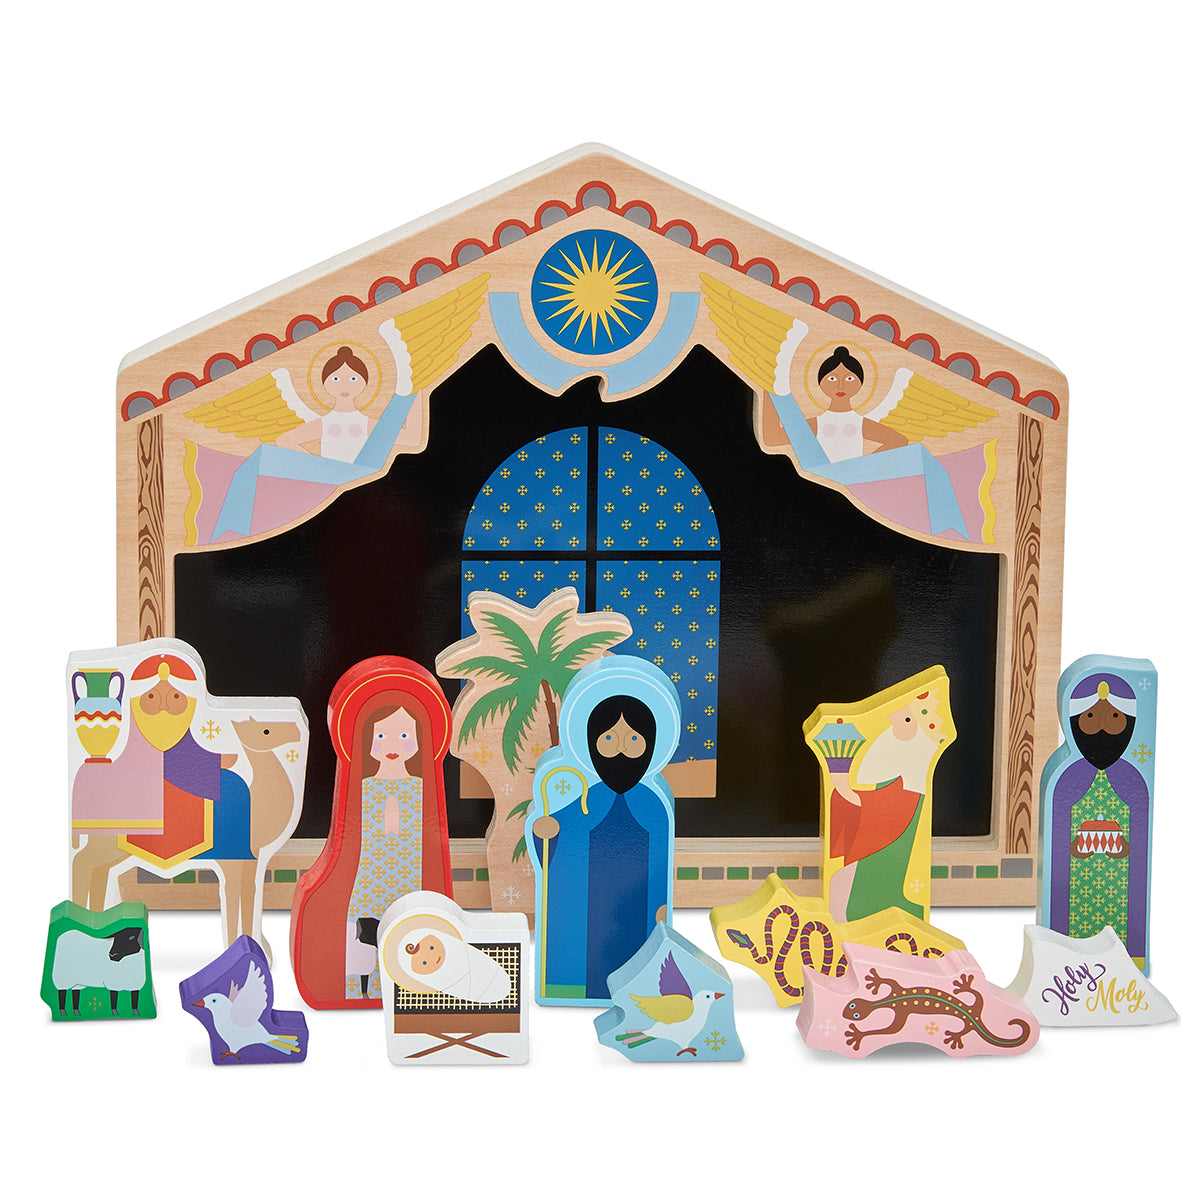 The Crib Nativity Scene